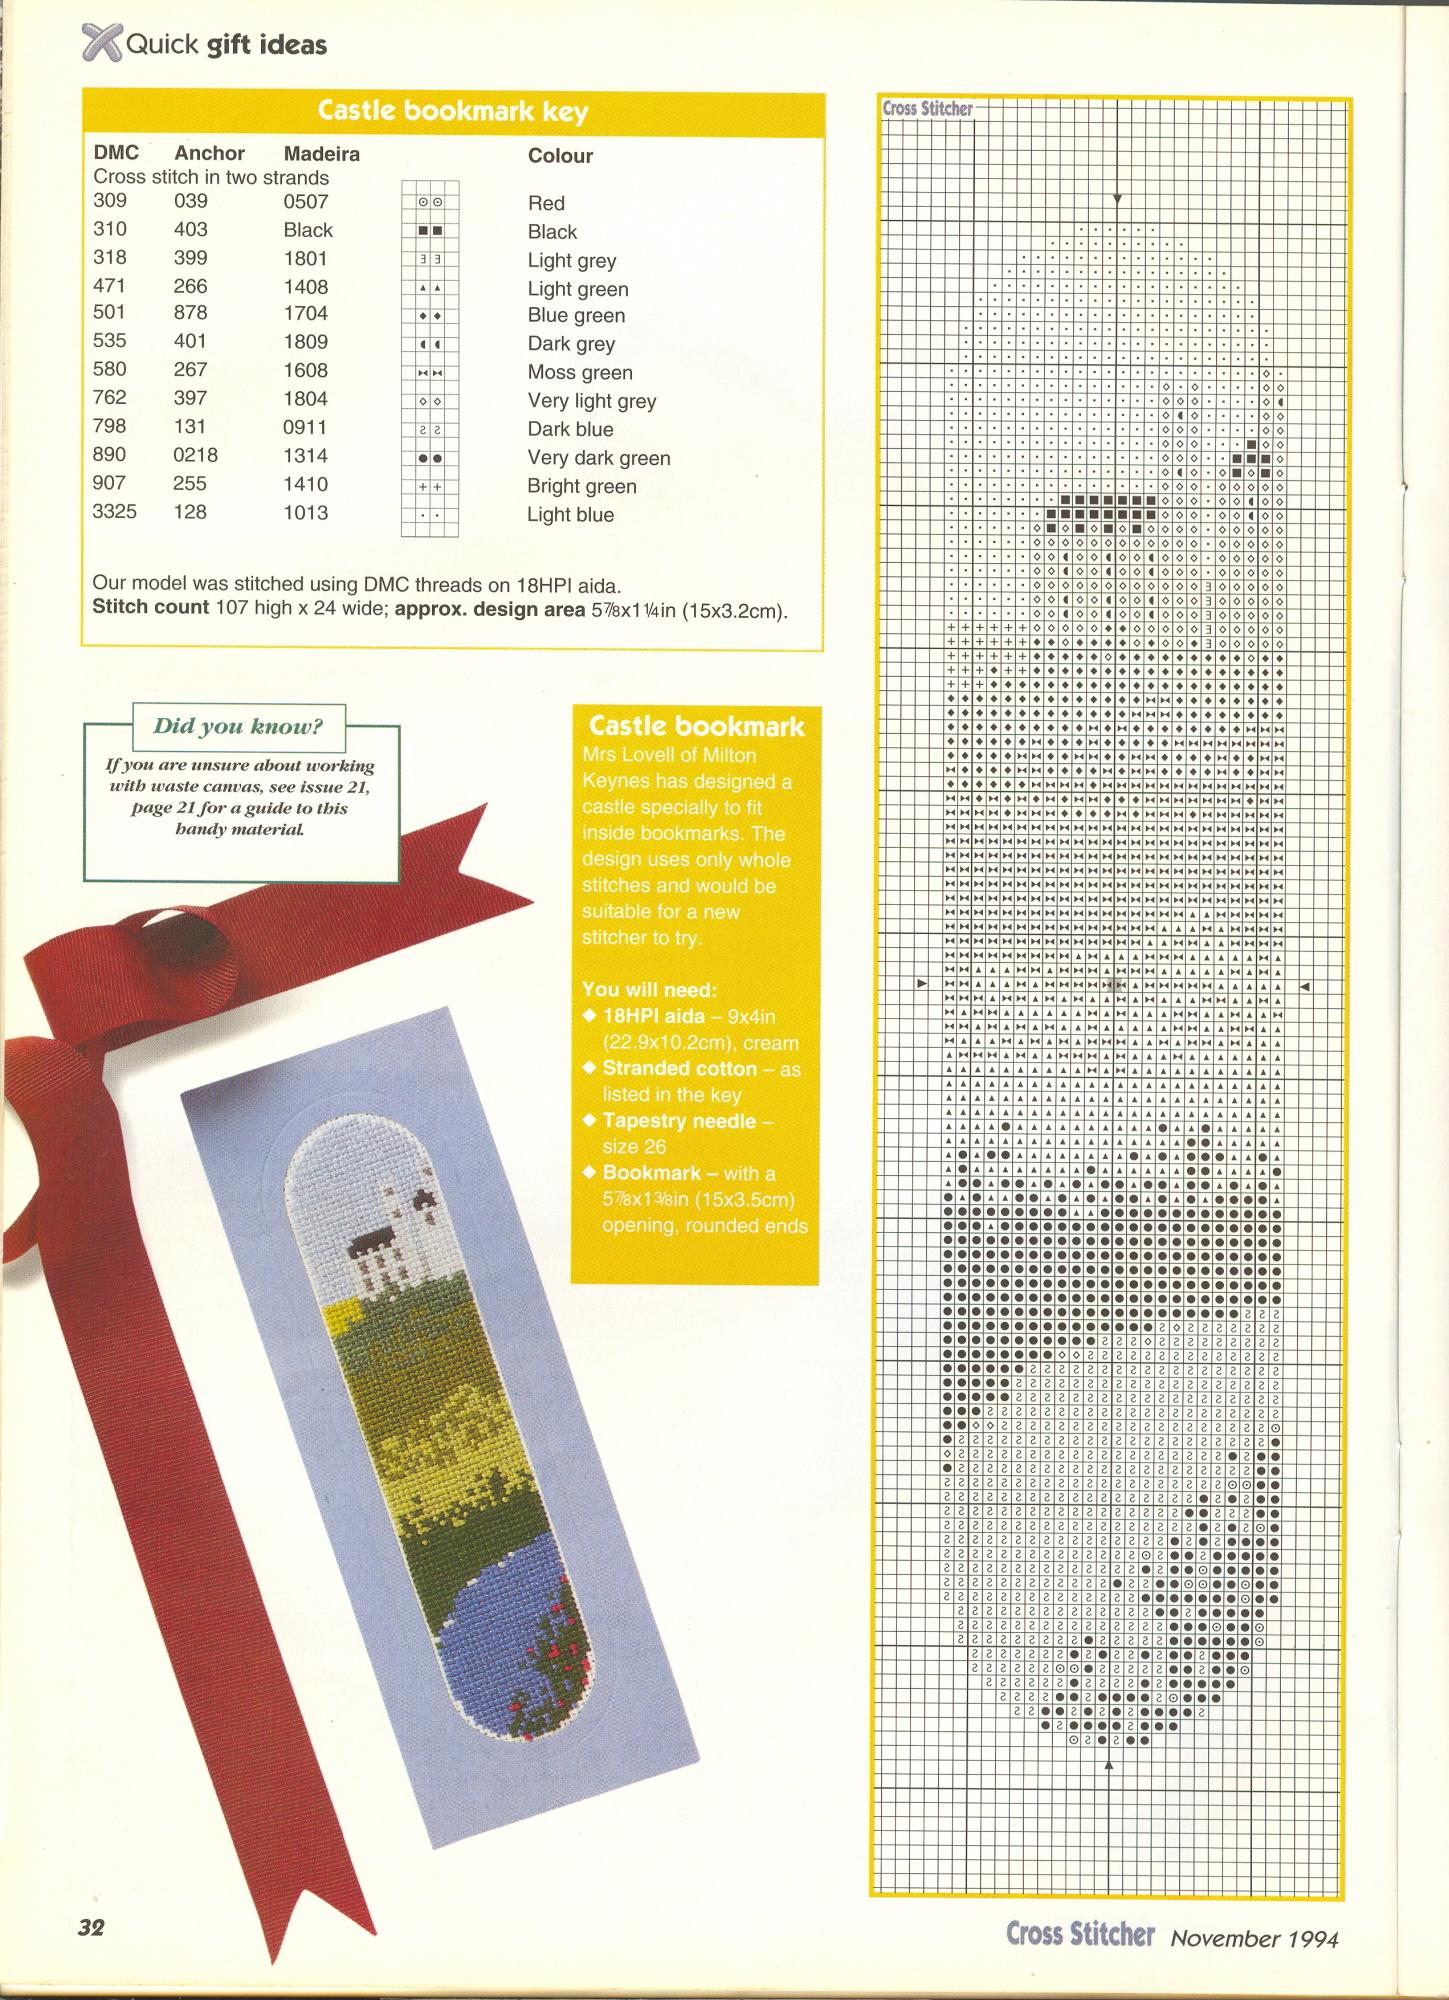 Cross stitch bookmark with landscape